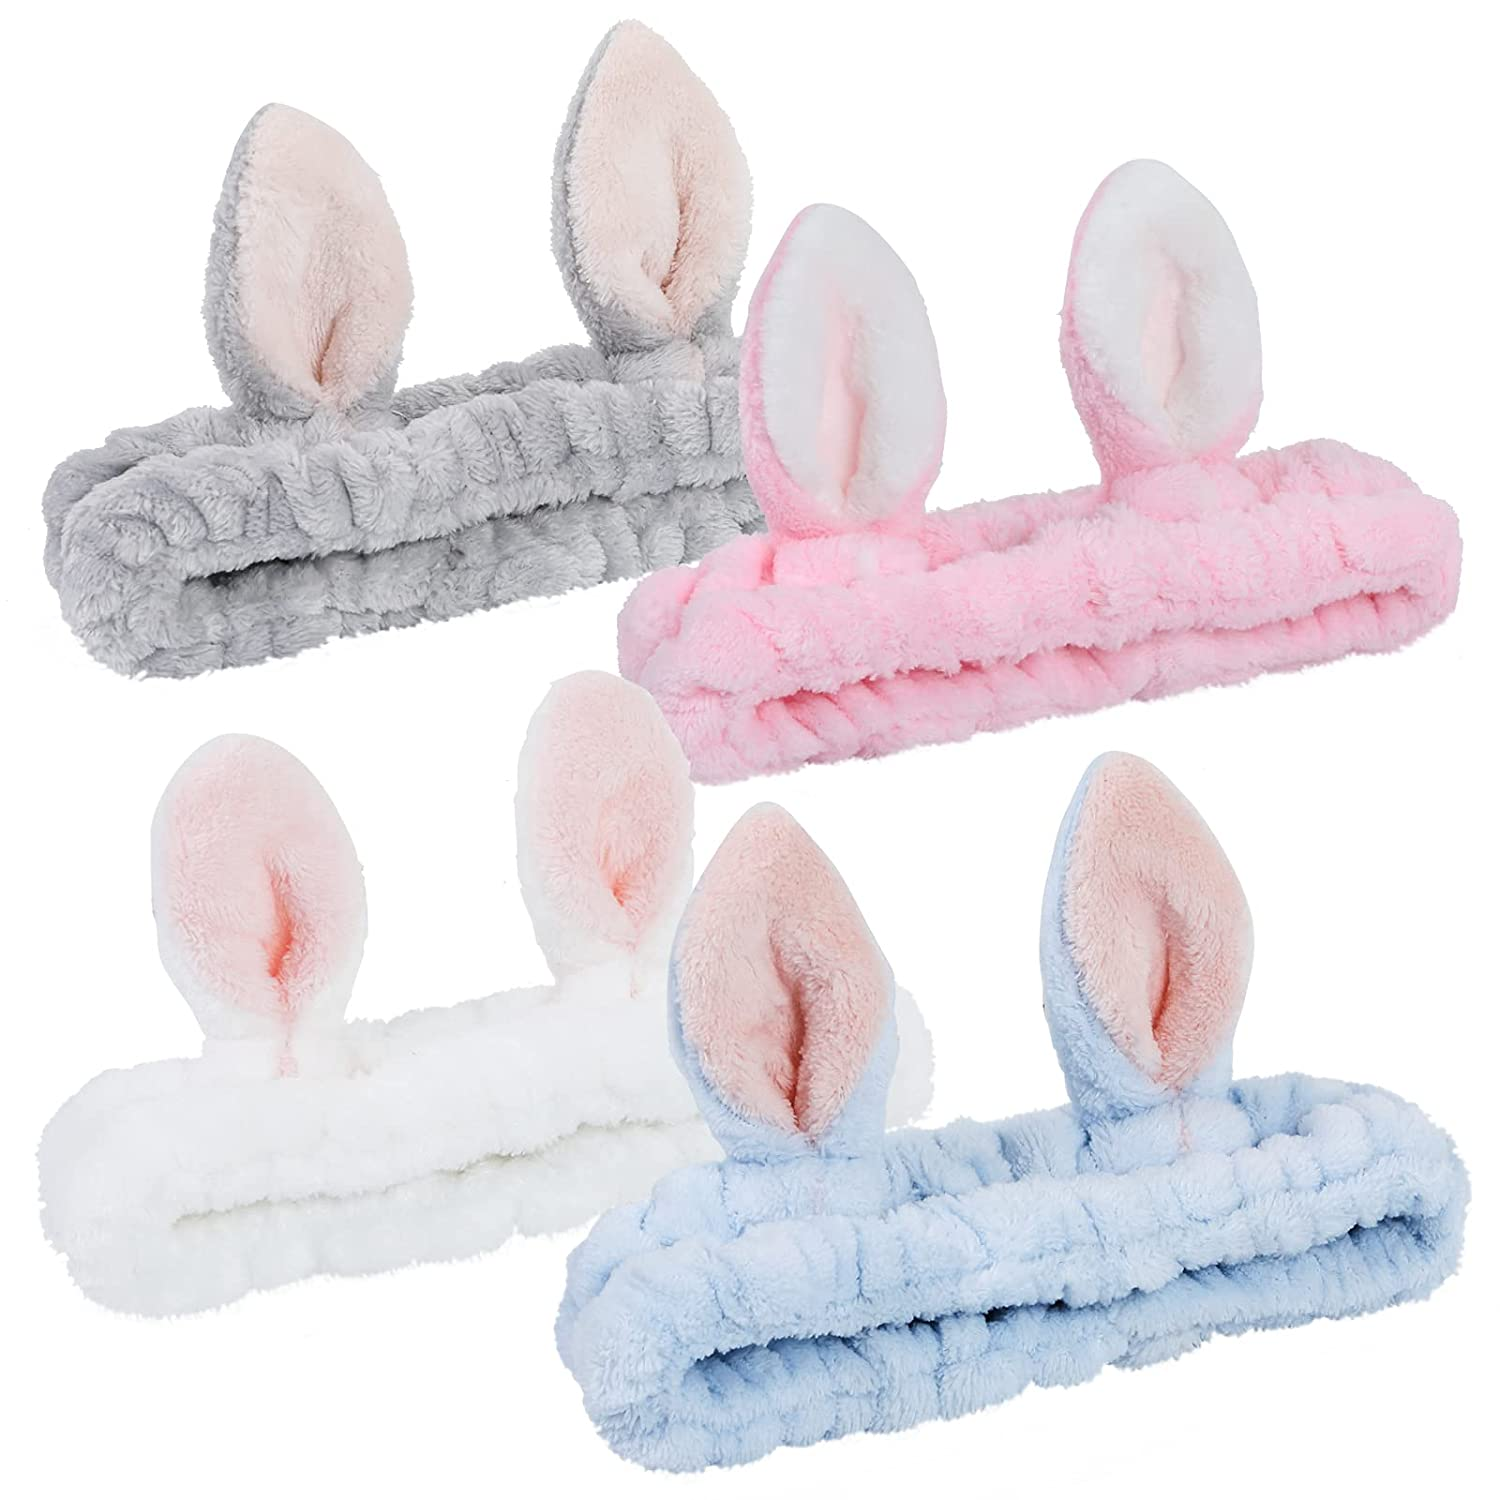 Makeup Spa Headbands for Women Bunny Ears Head Wraps